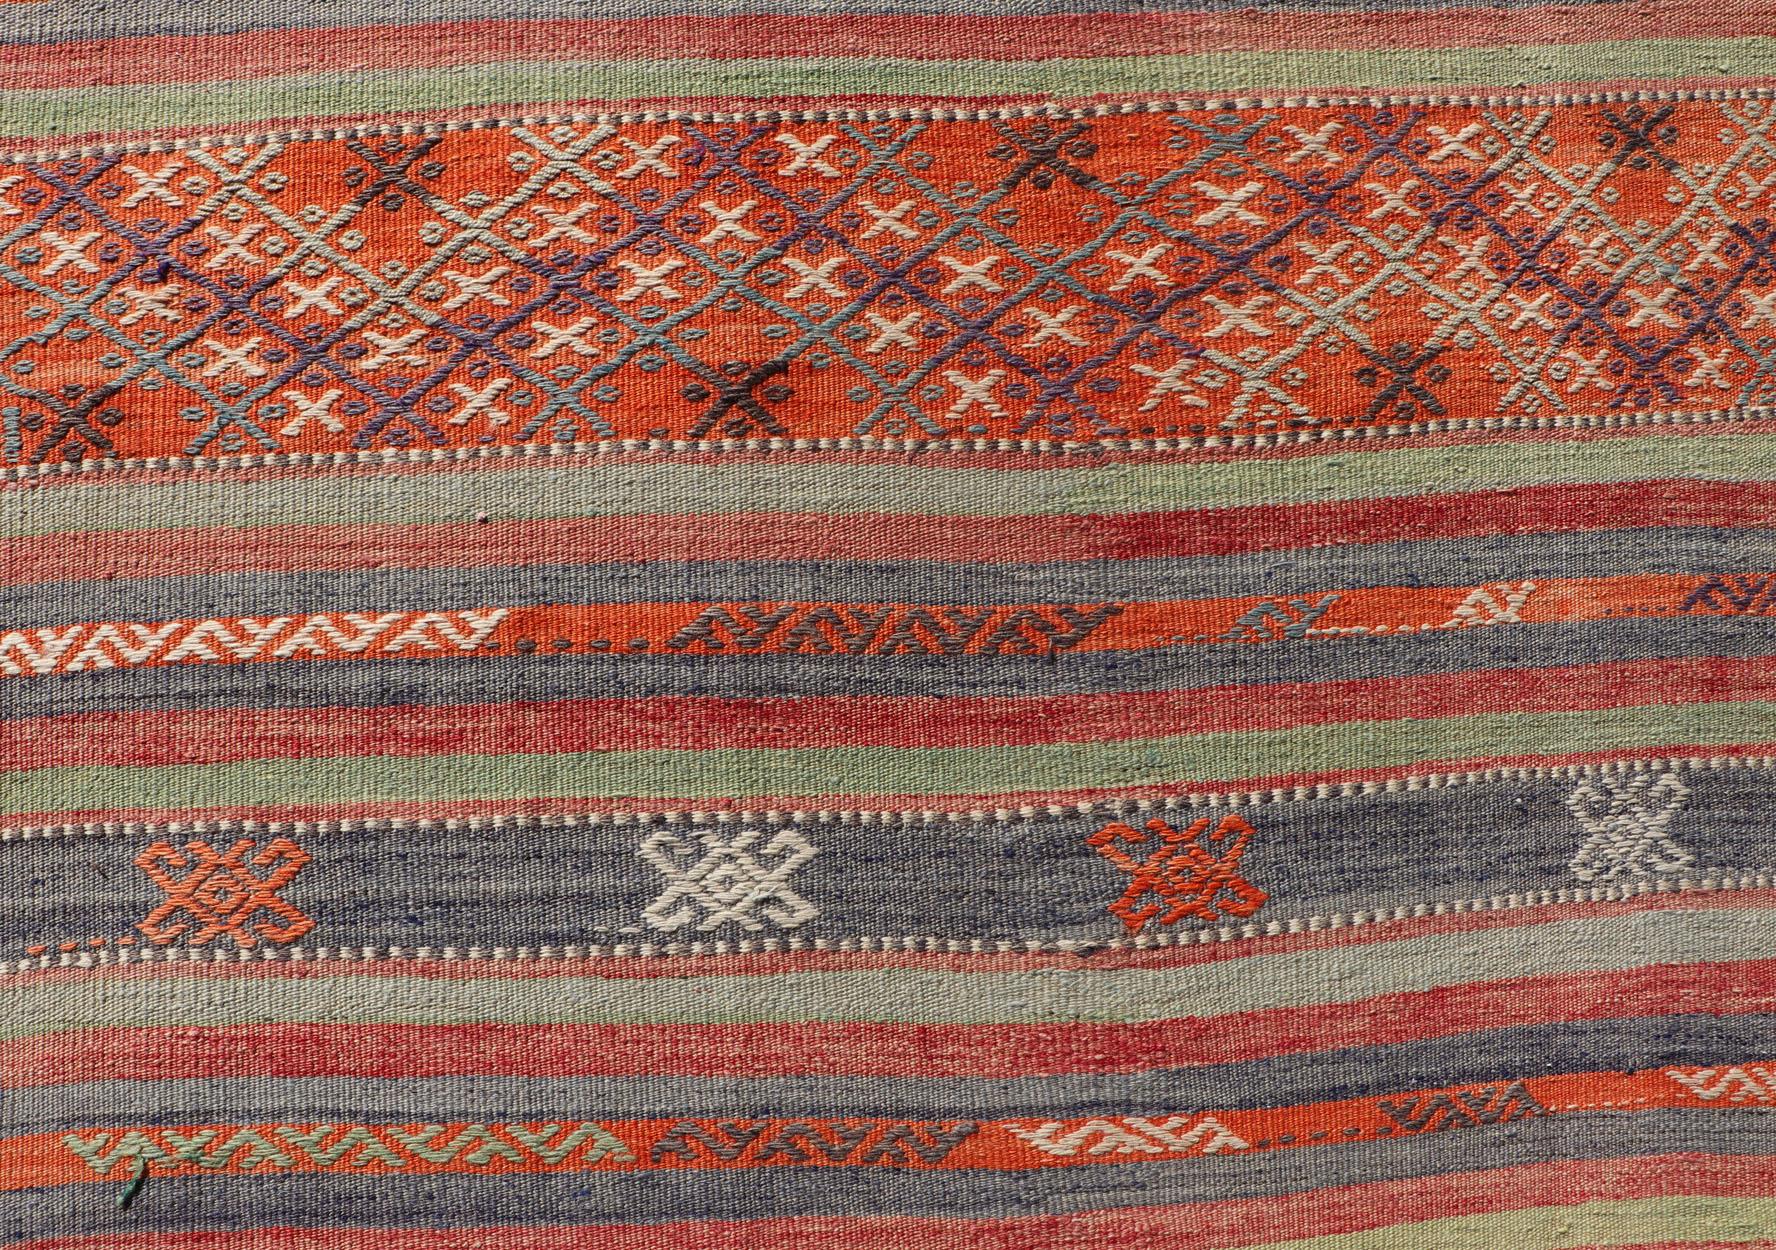 20th Century Multicolored Vintage Turkish Large Kilim Rug with Stripes Design